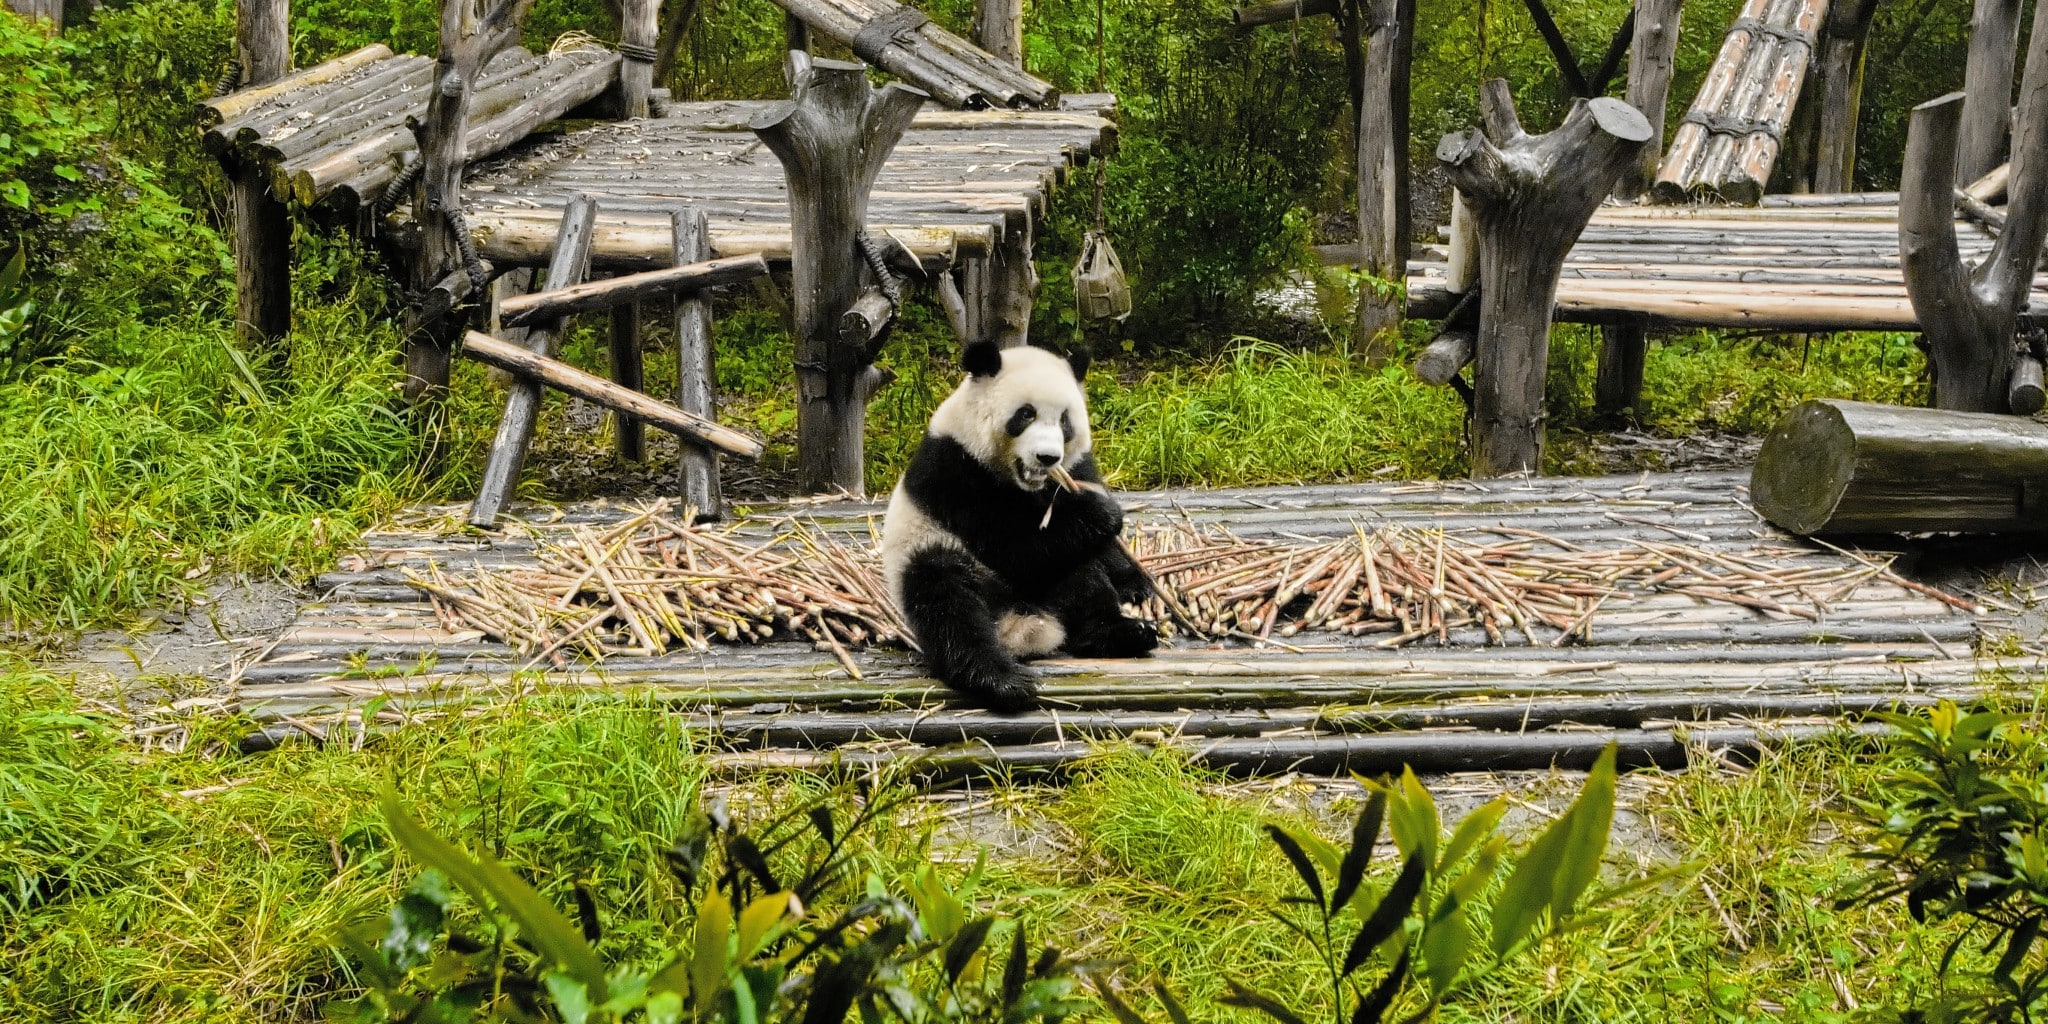 Pandas, Buddhas, and a Glass Bridge in China